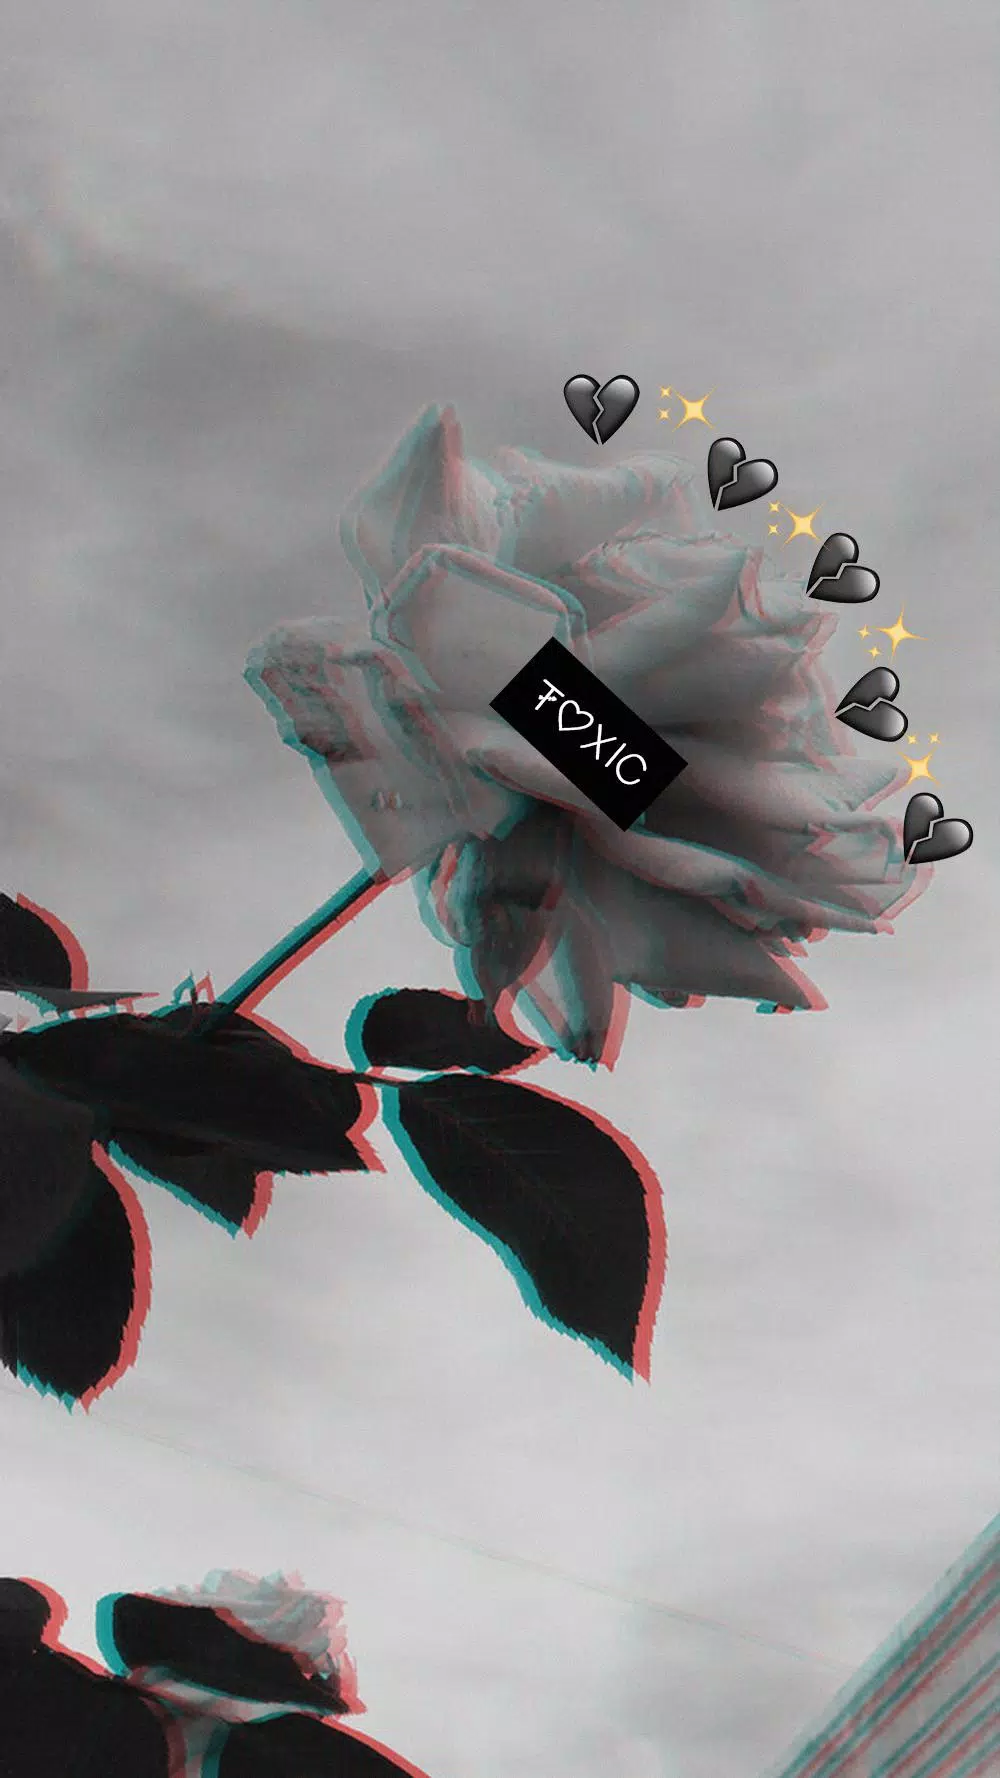 A rose with hearts around it - Emoji